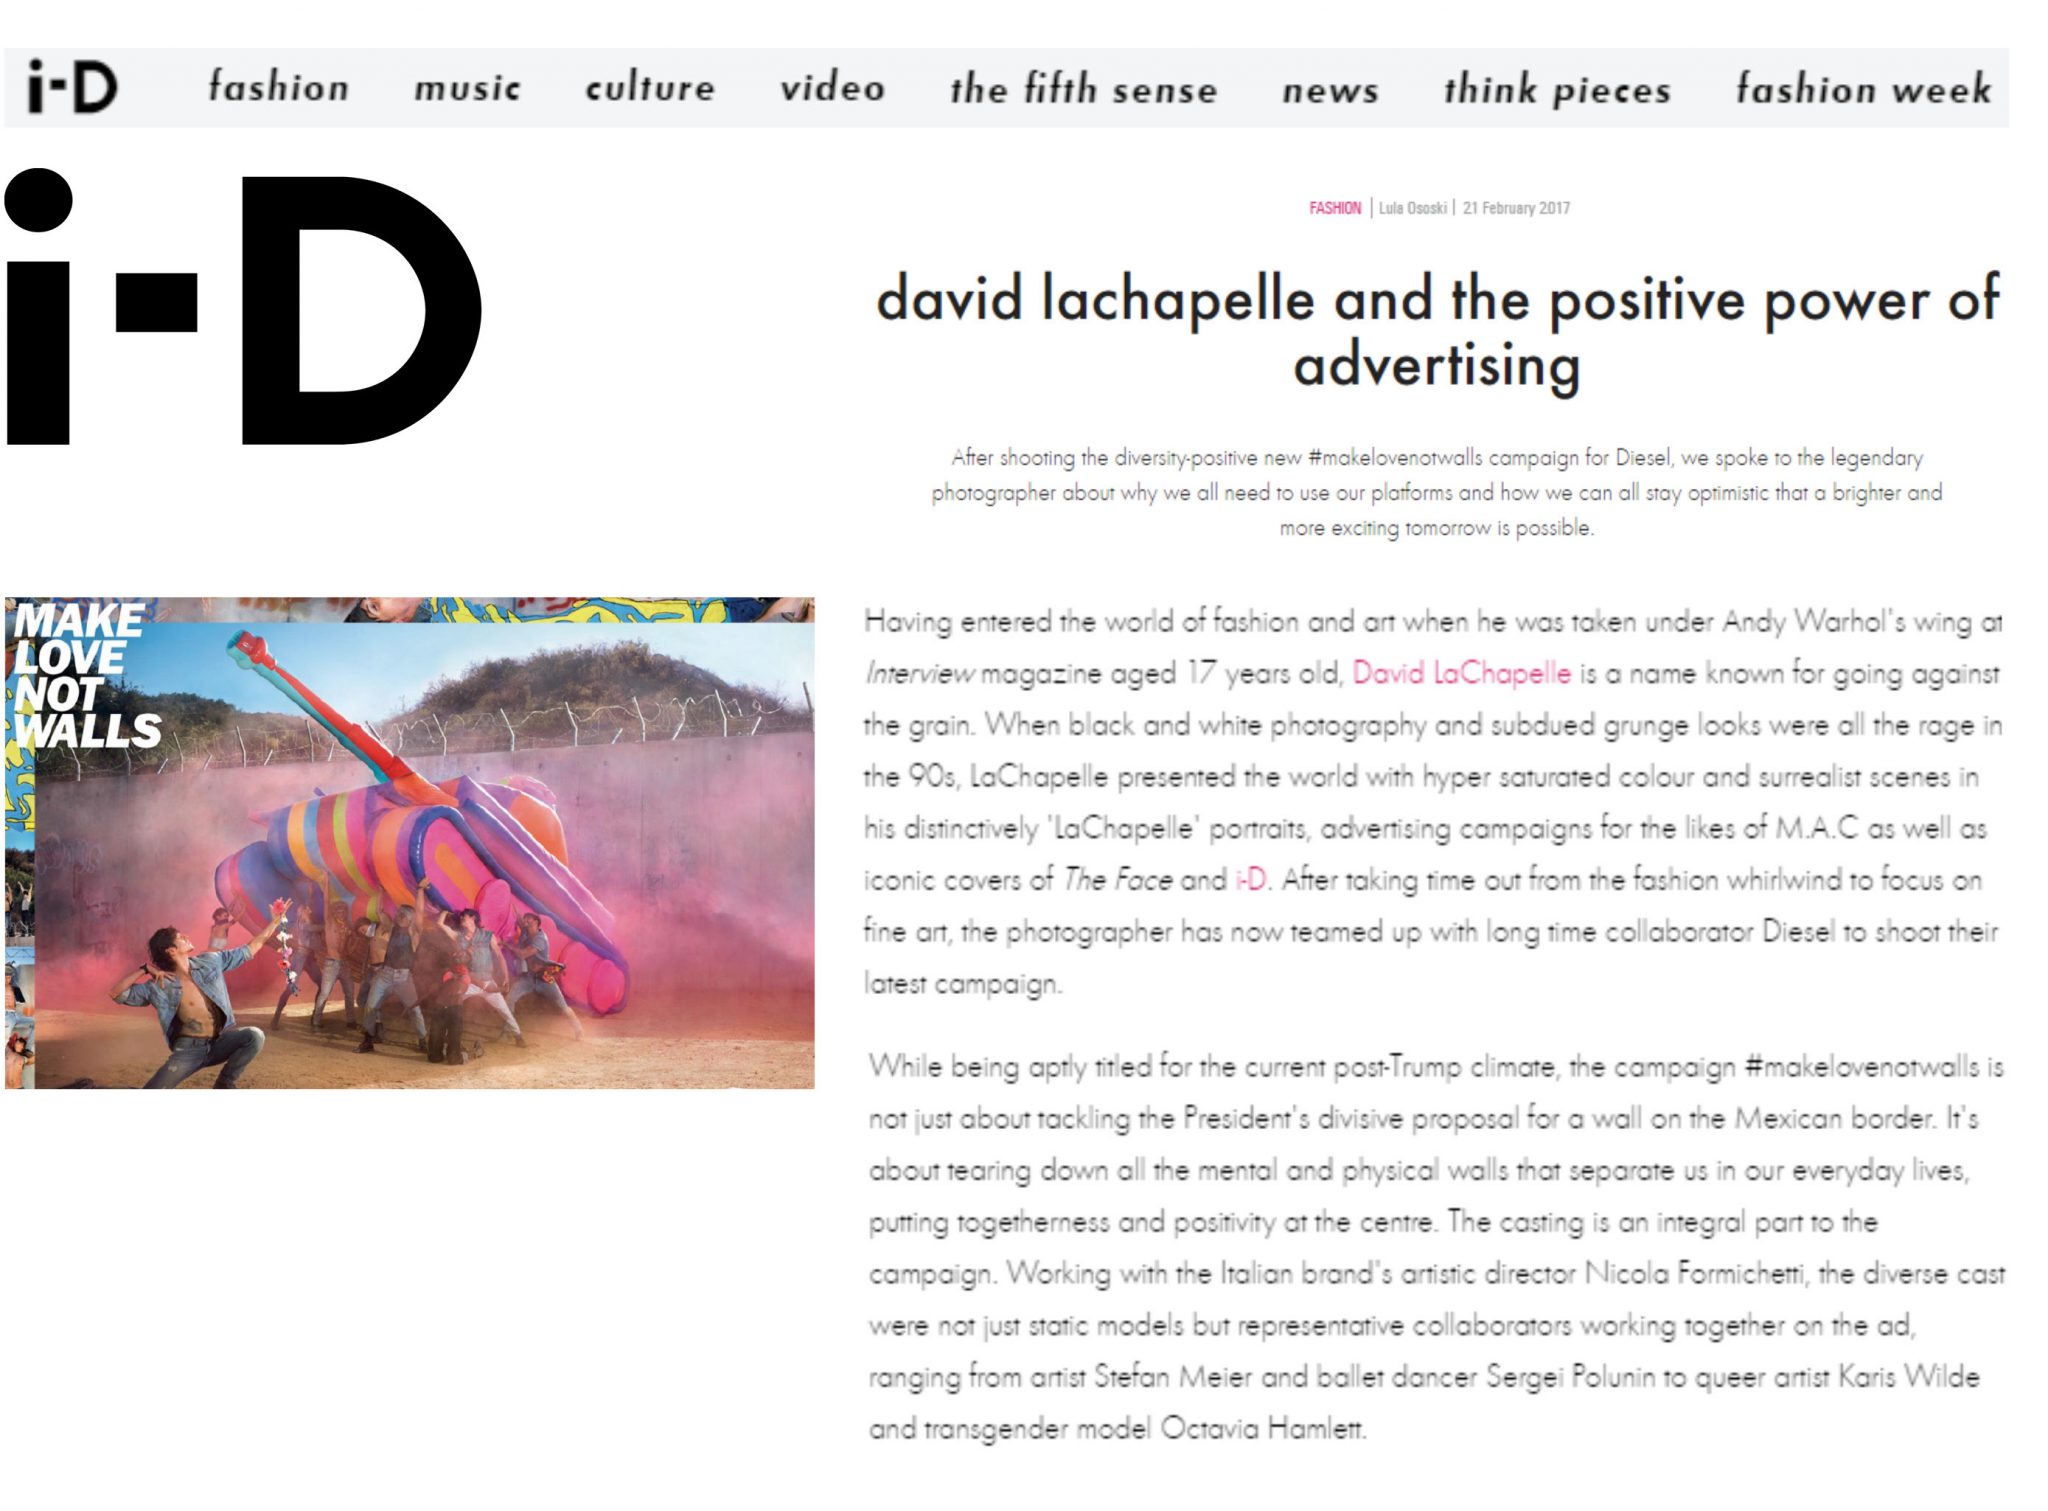 David LaChapelle | Diesel - Make love not walls | Selected Press: I-D Magazine
| 25